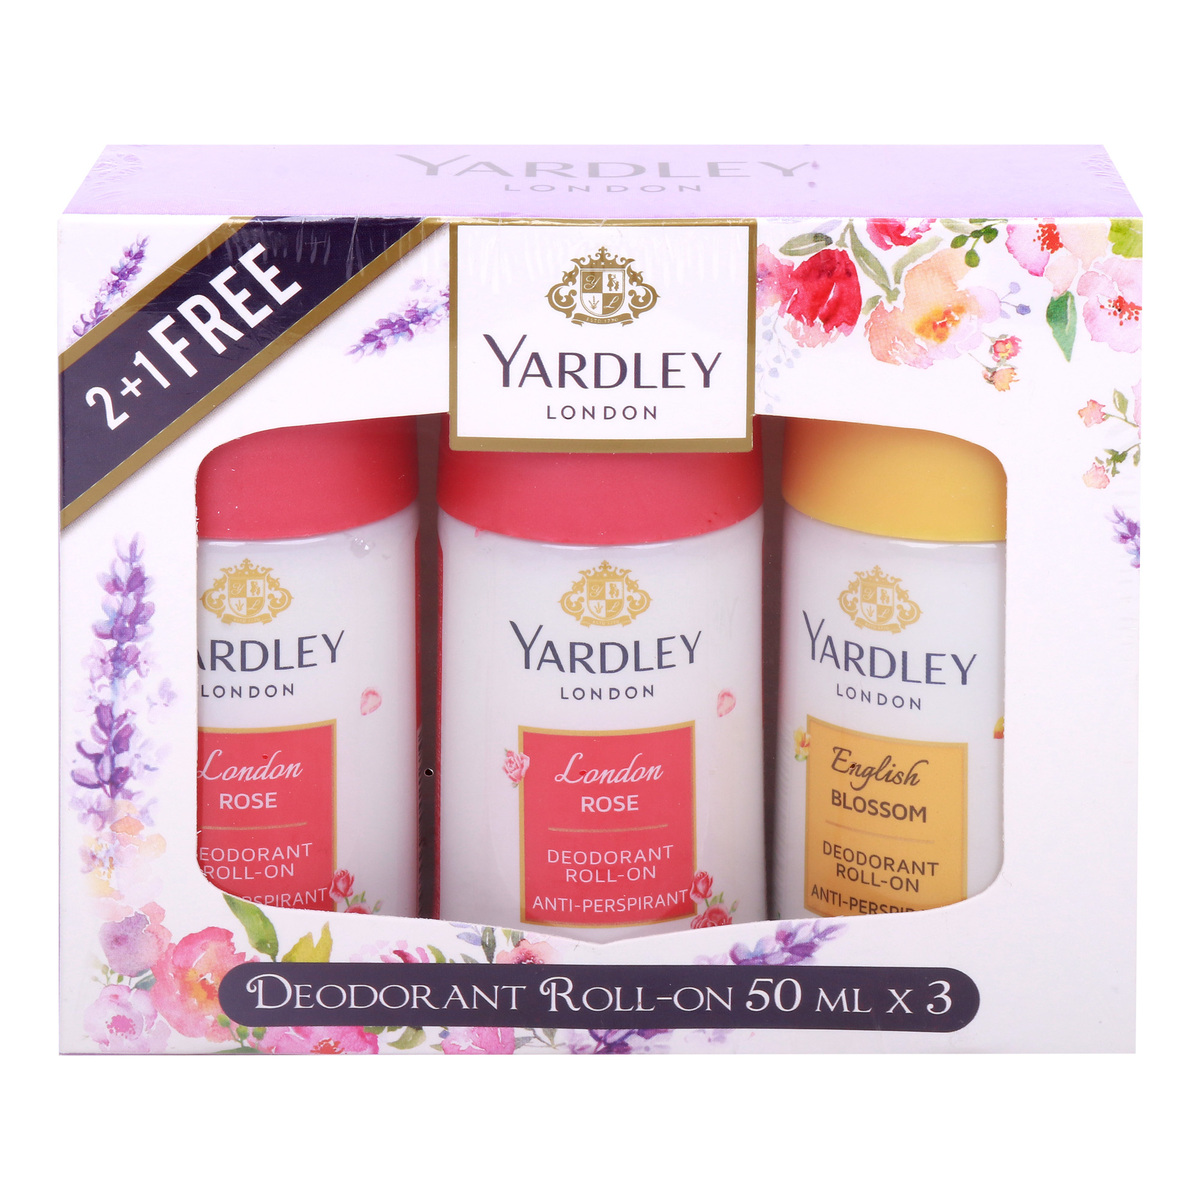 Yardley Anti-Perspirant Roll-On, 3 x 50 ml